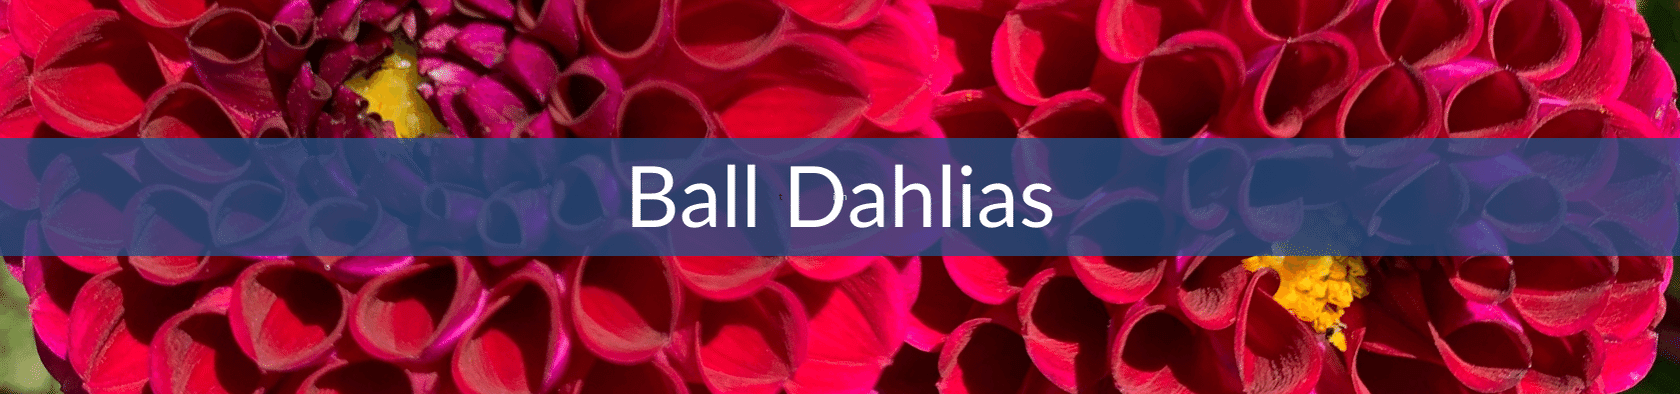 Ball Dahlias.png__PID:e7e3d1af-9ccd-40ed-89a7-acfc8ded9323